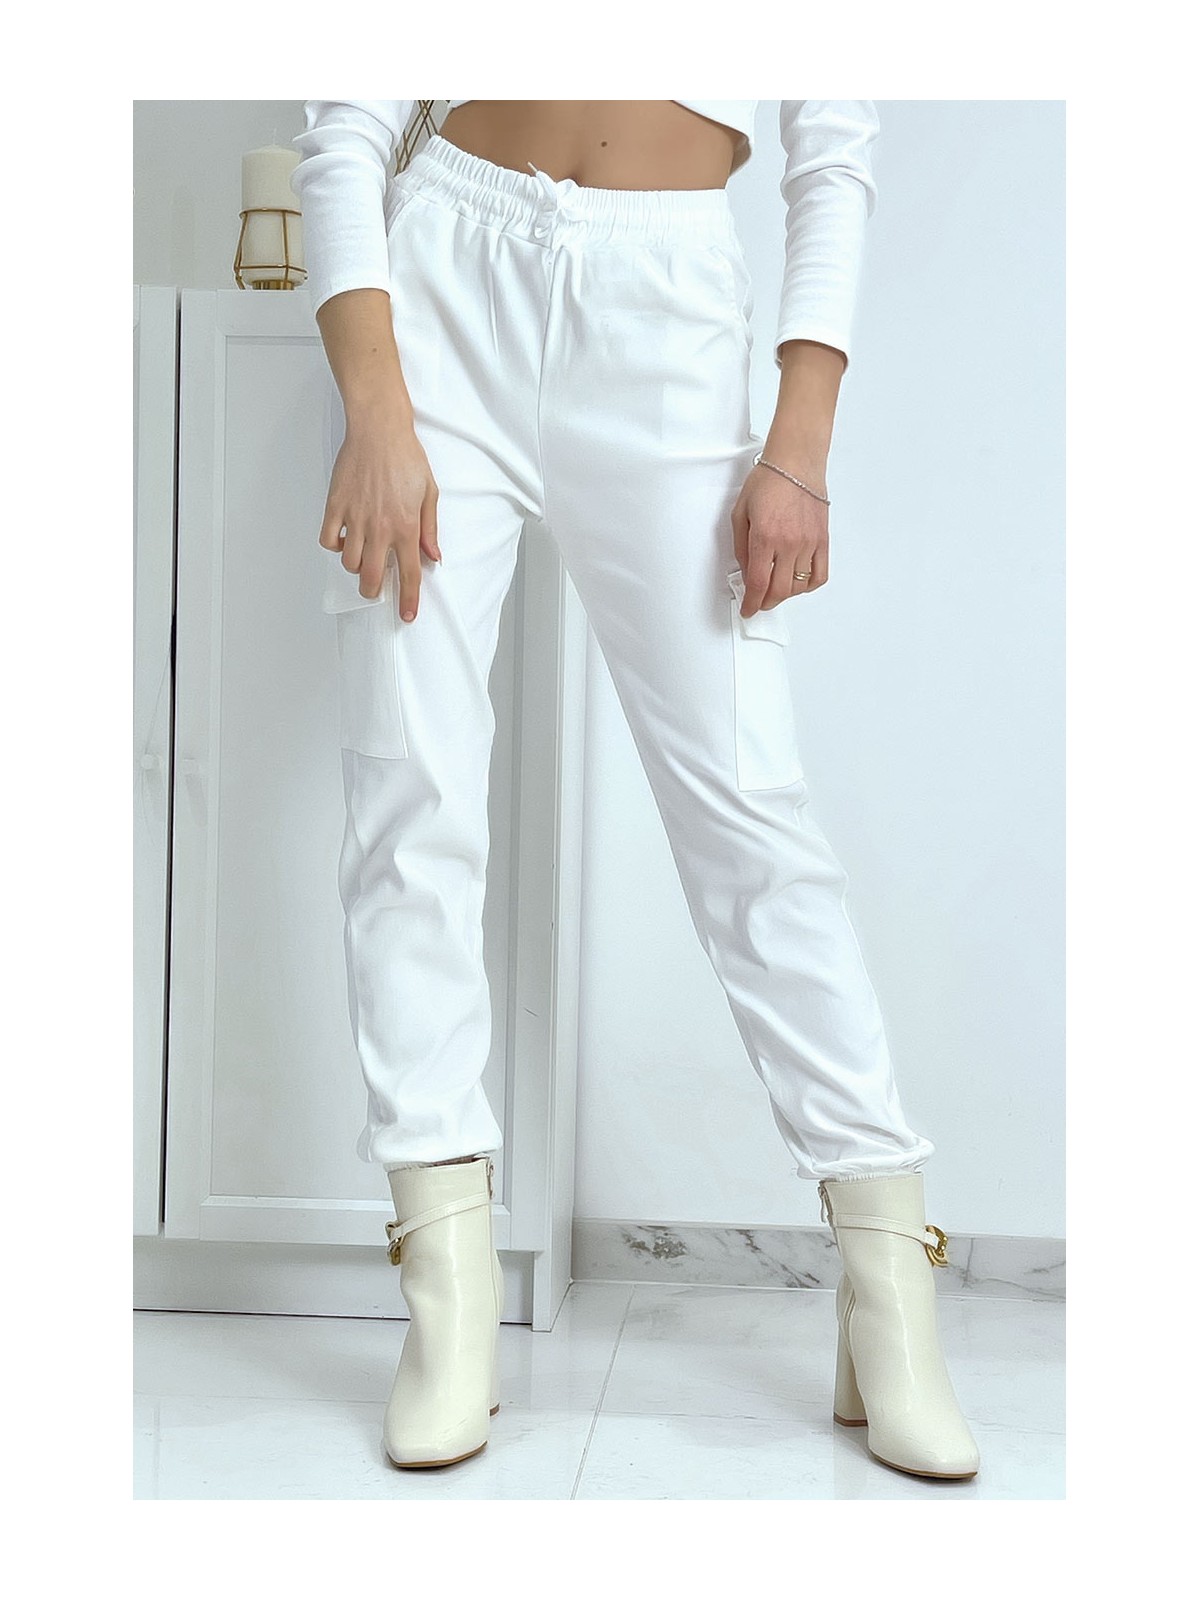 Pantalon treillis blanc en strech avec poches - 1